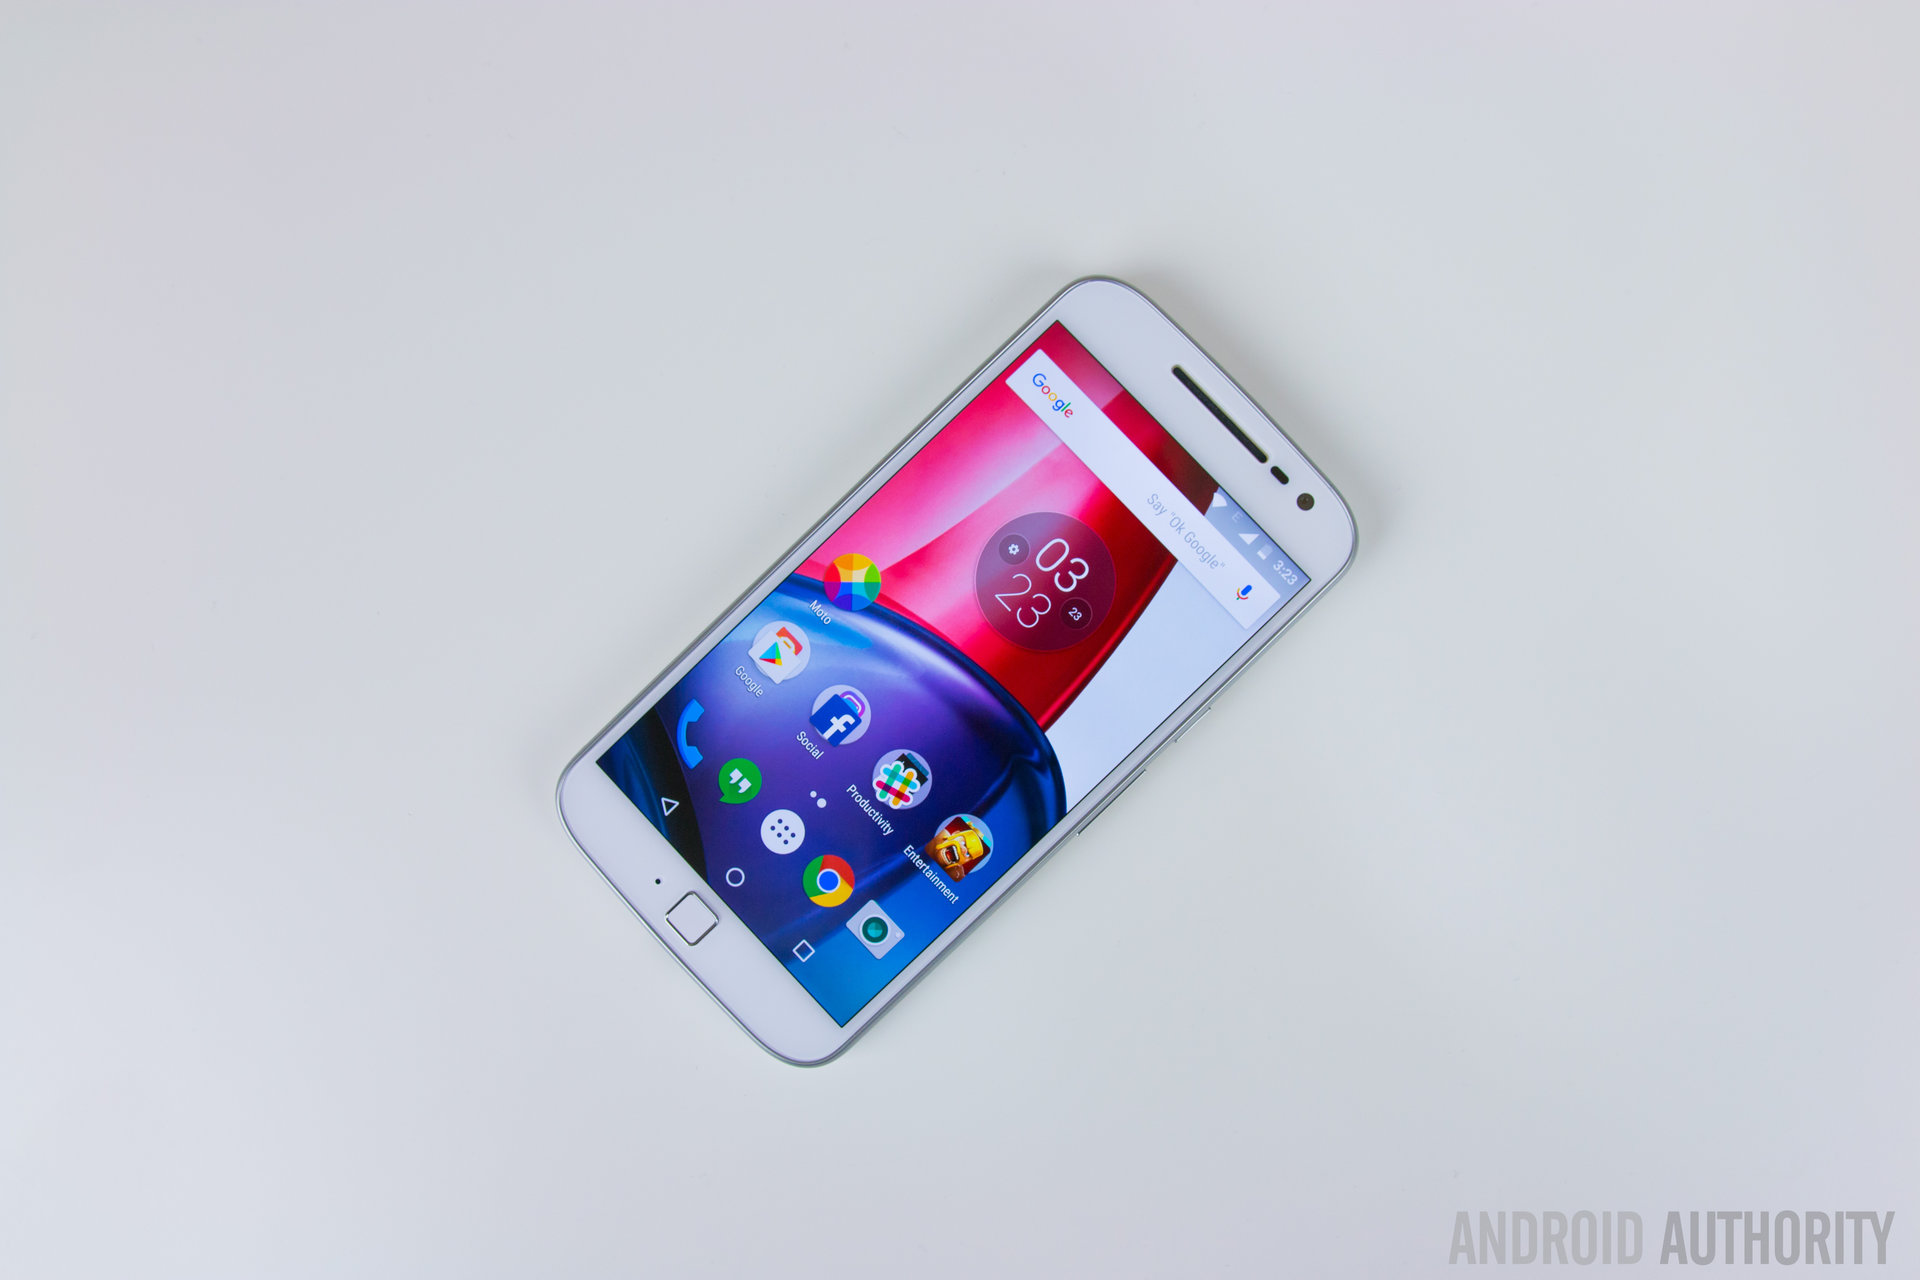 Motorola G4 Plus - Android Authority